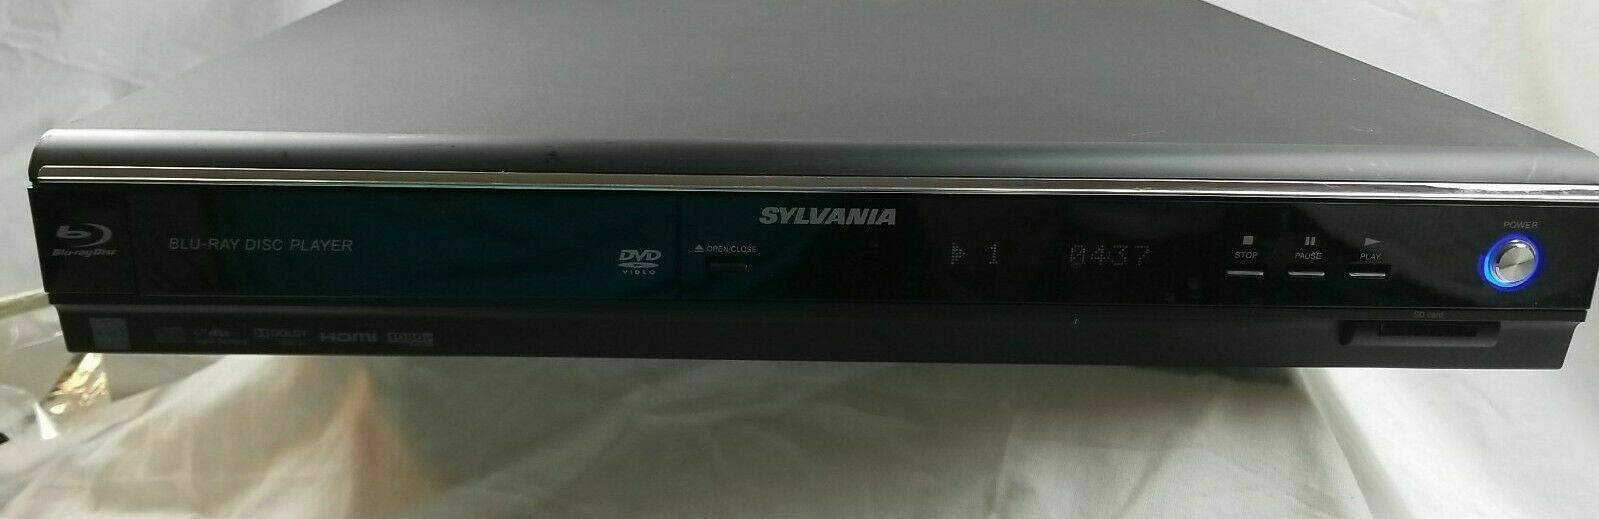 Sylvania Blu Ray Disc Player model NB500SL9 tested! - $45.99